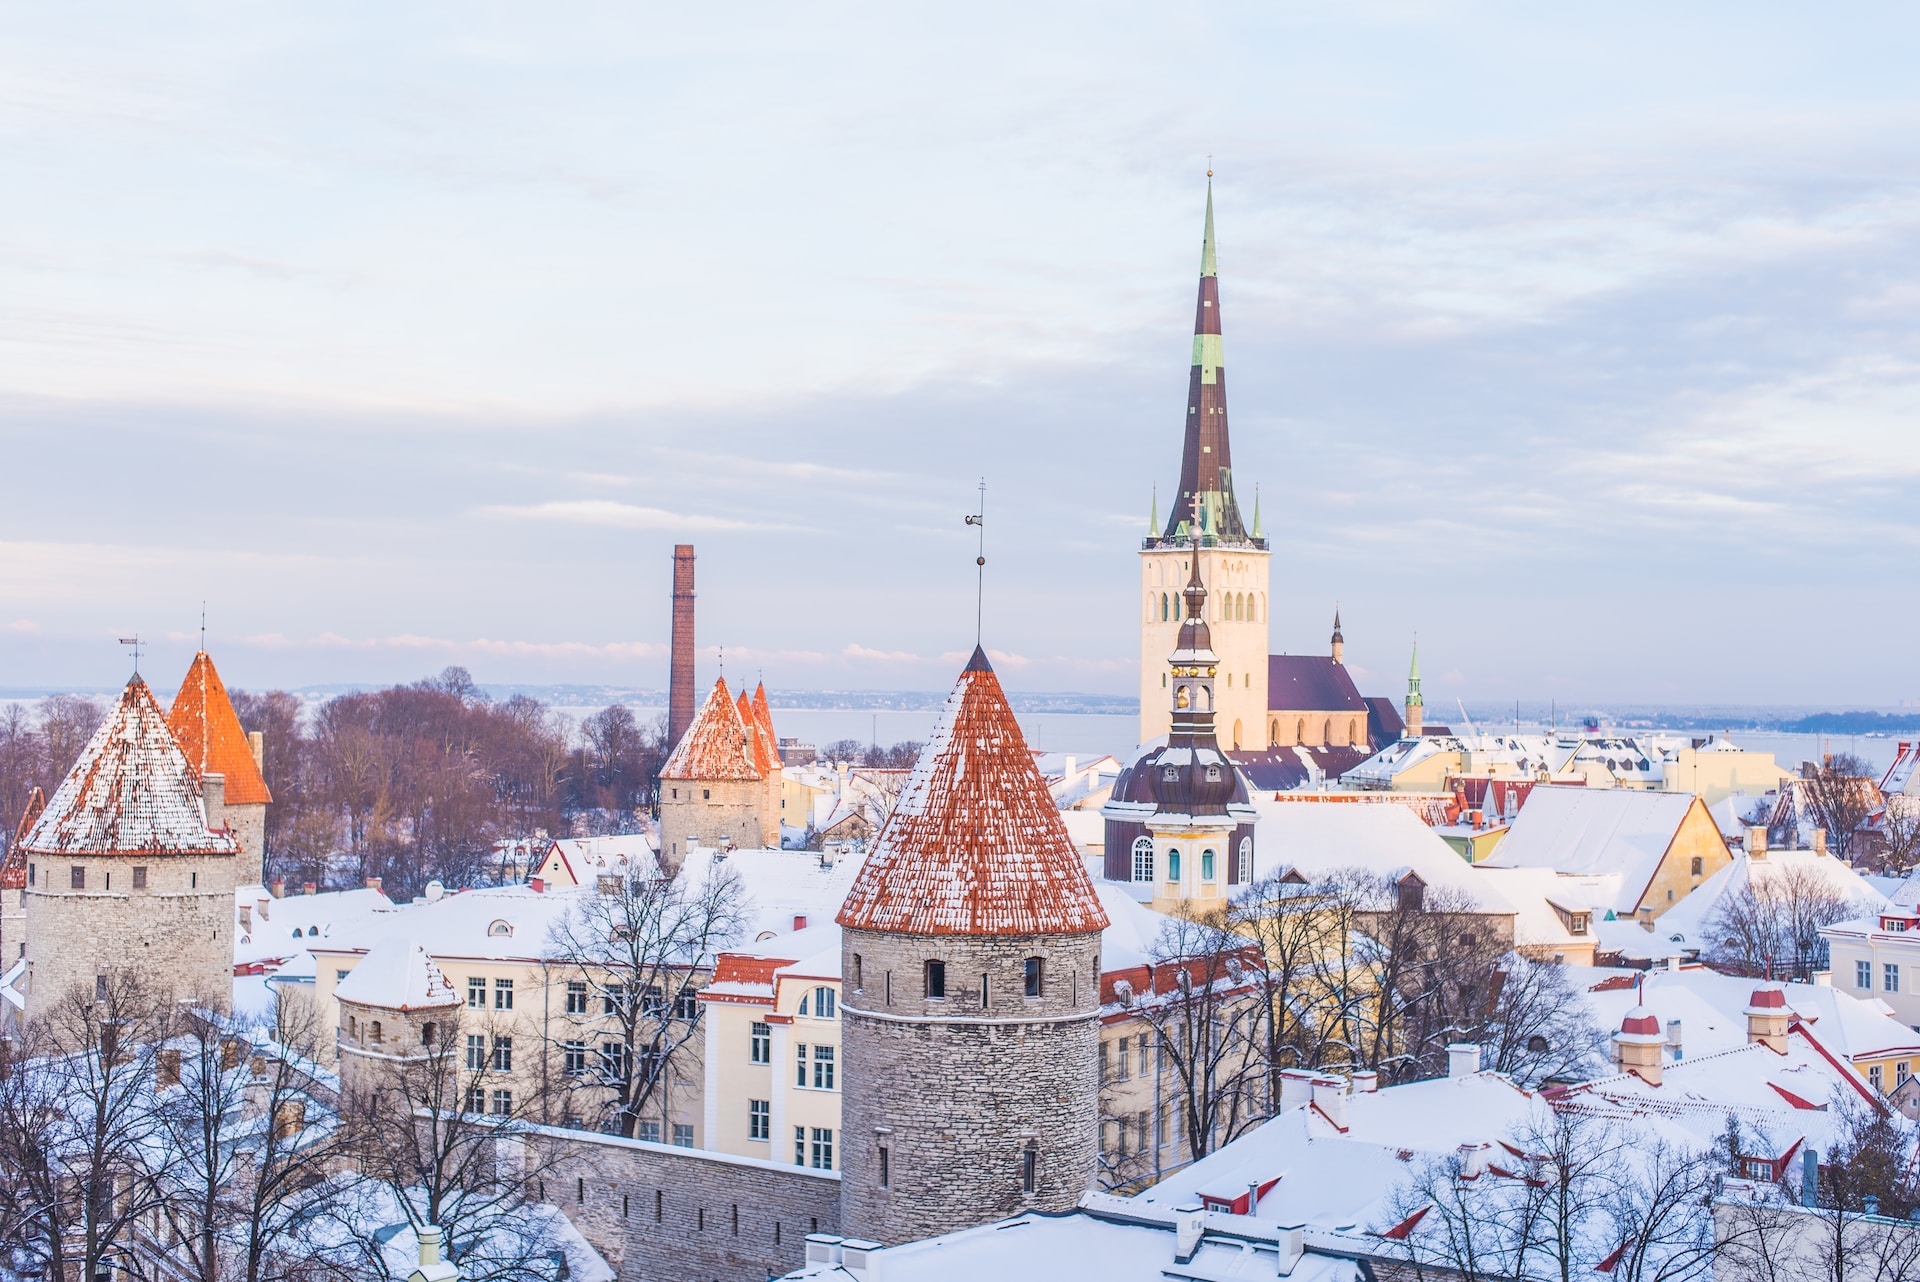 Tallinn Estonia
